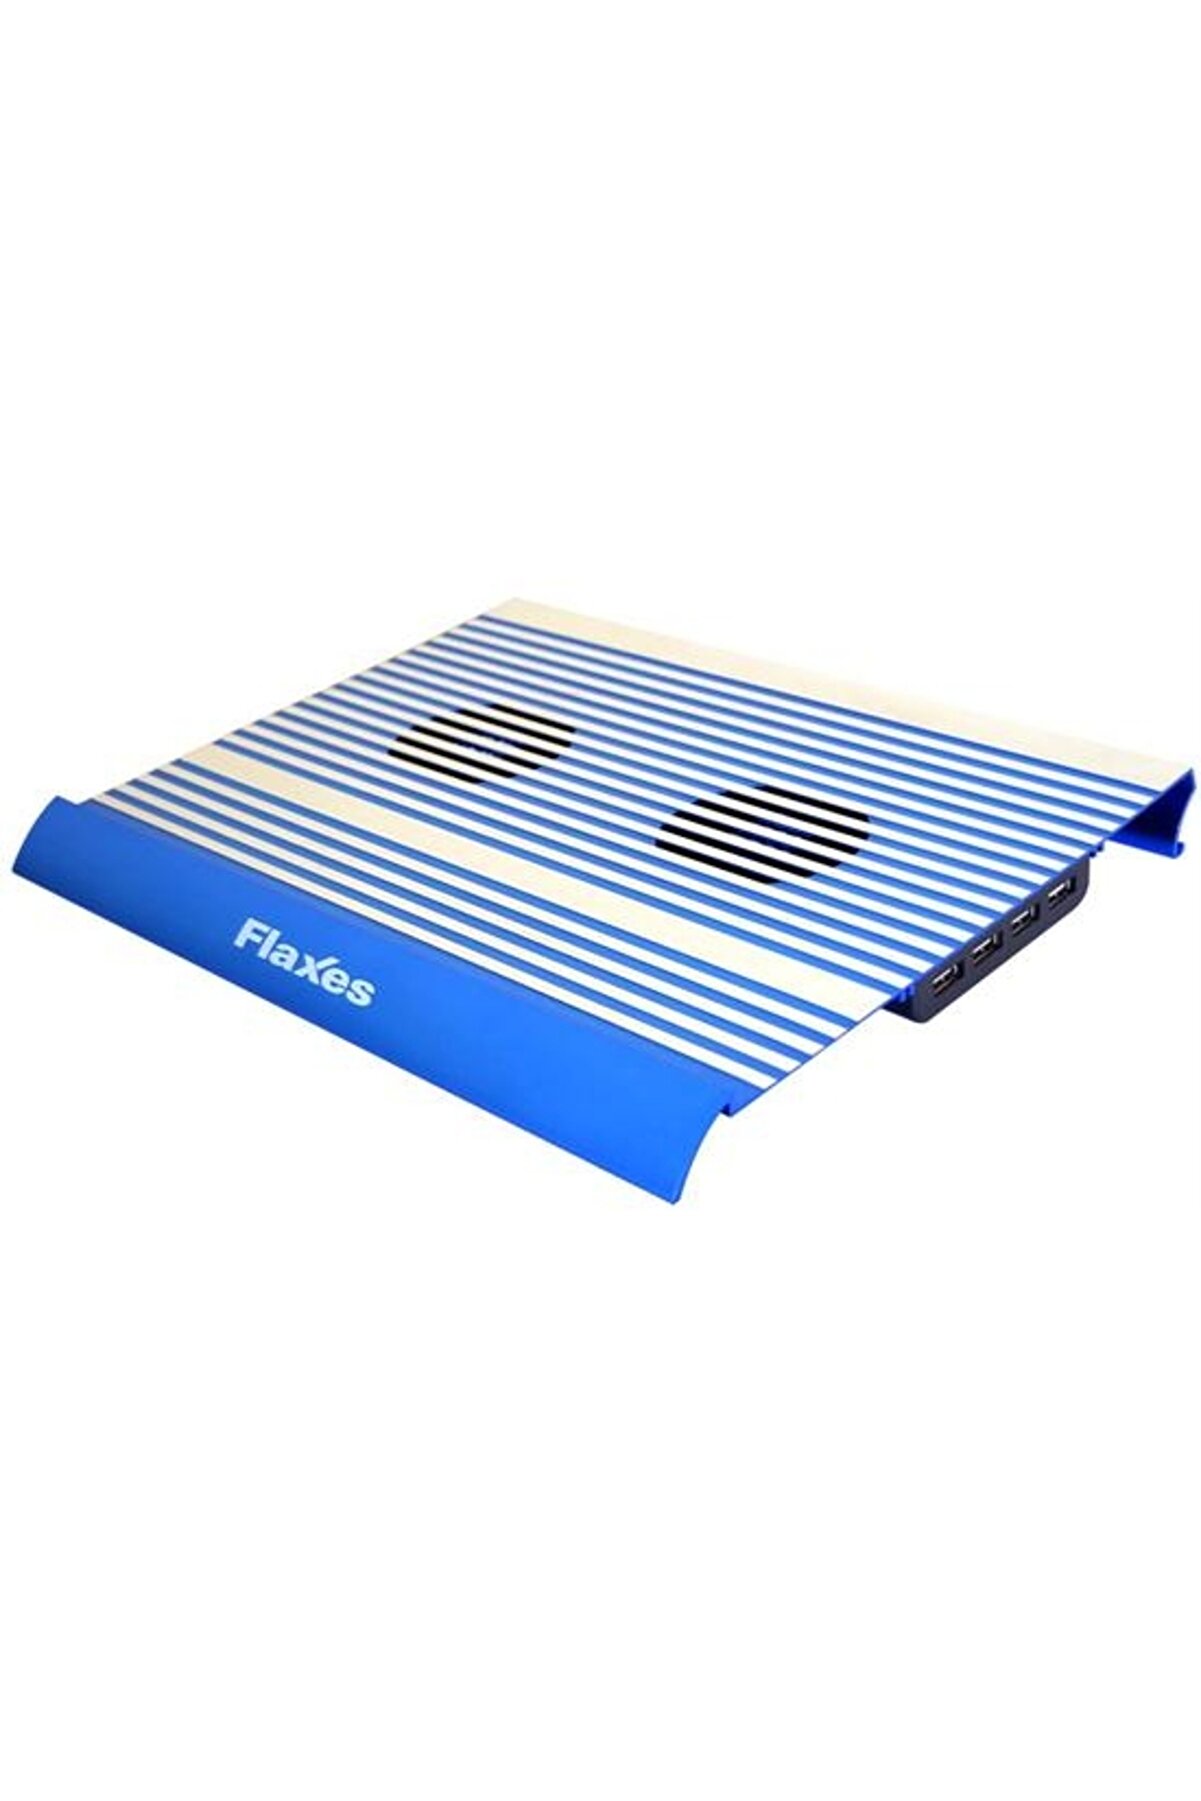 FLAXES Fn-333m Notebook Soğutucu,4usb,mavi 7"-17"